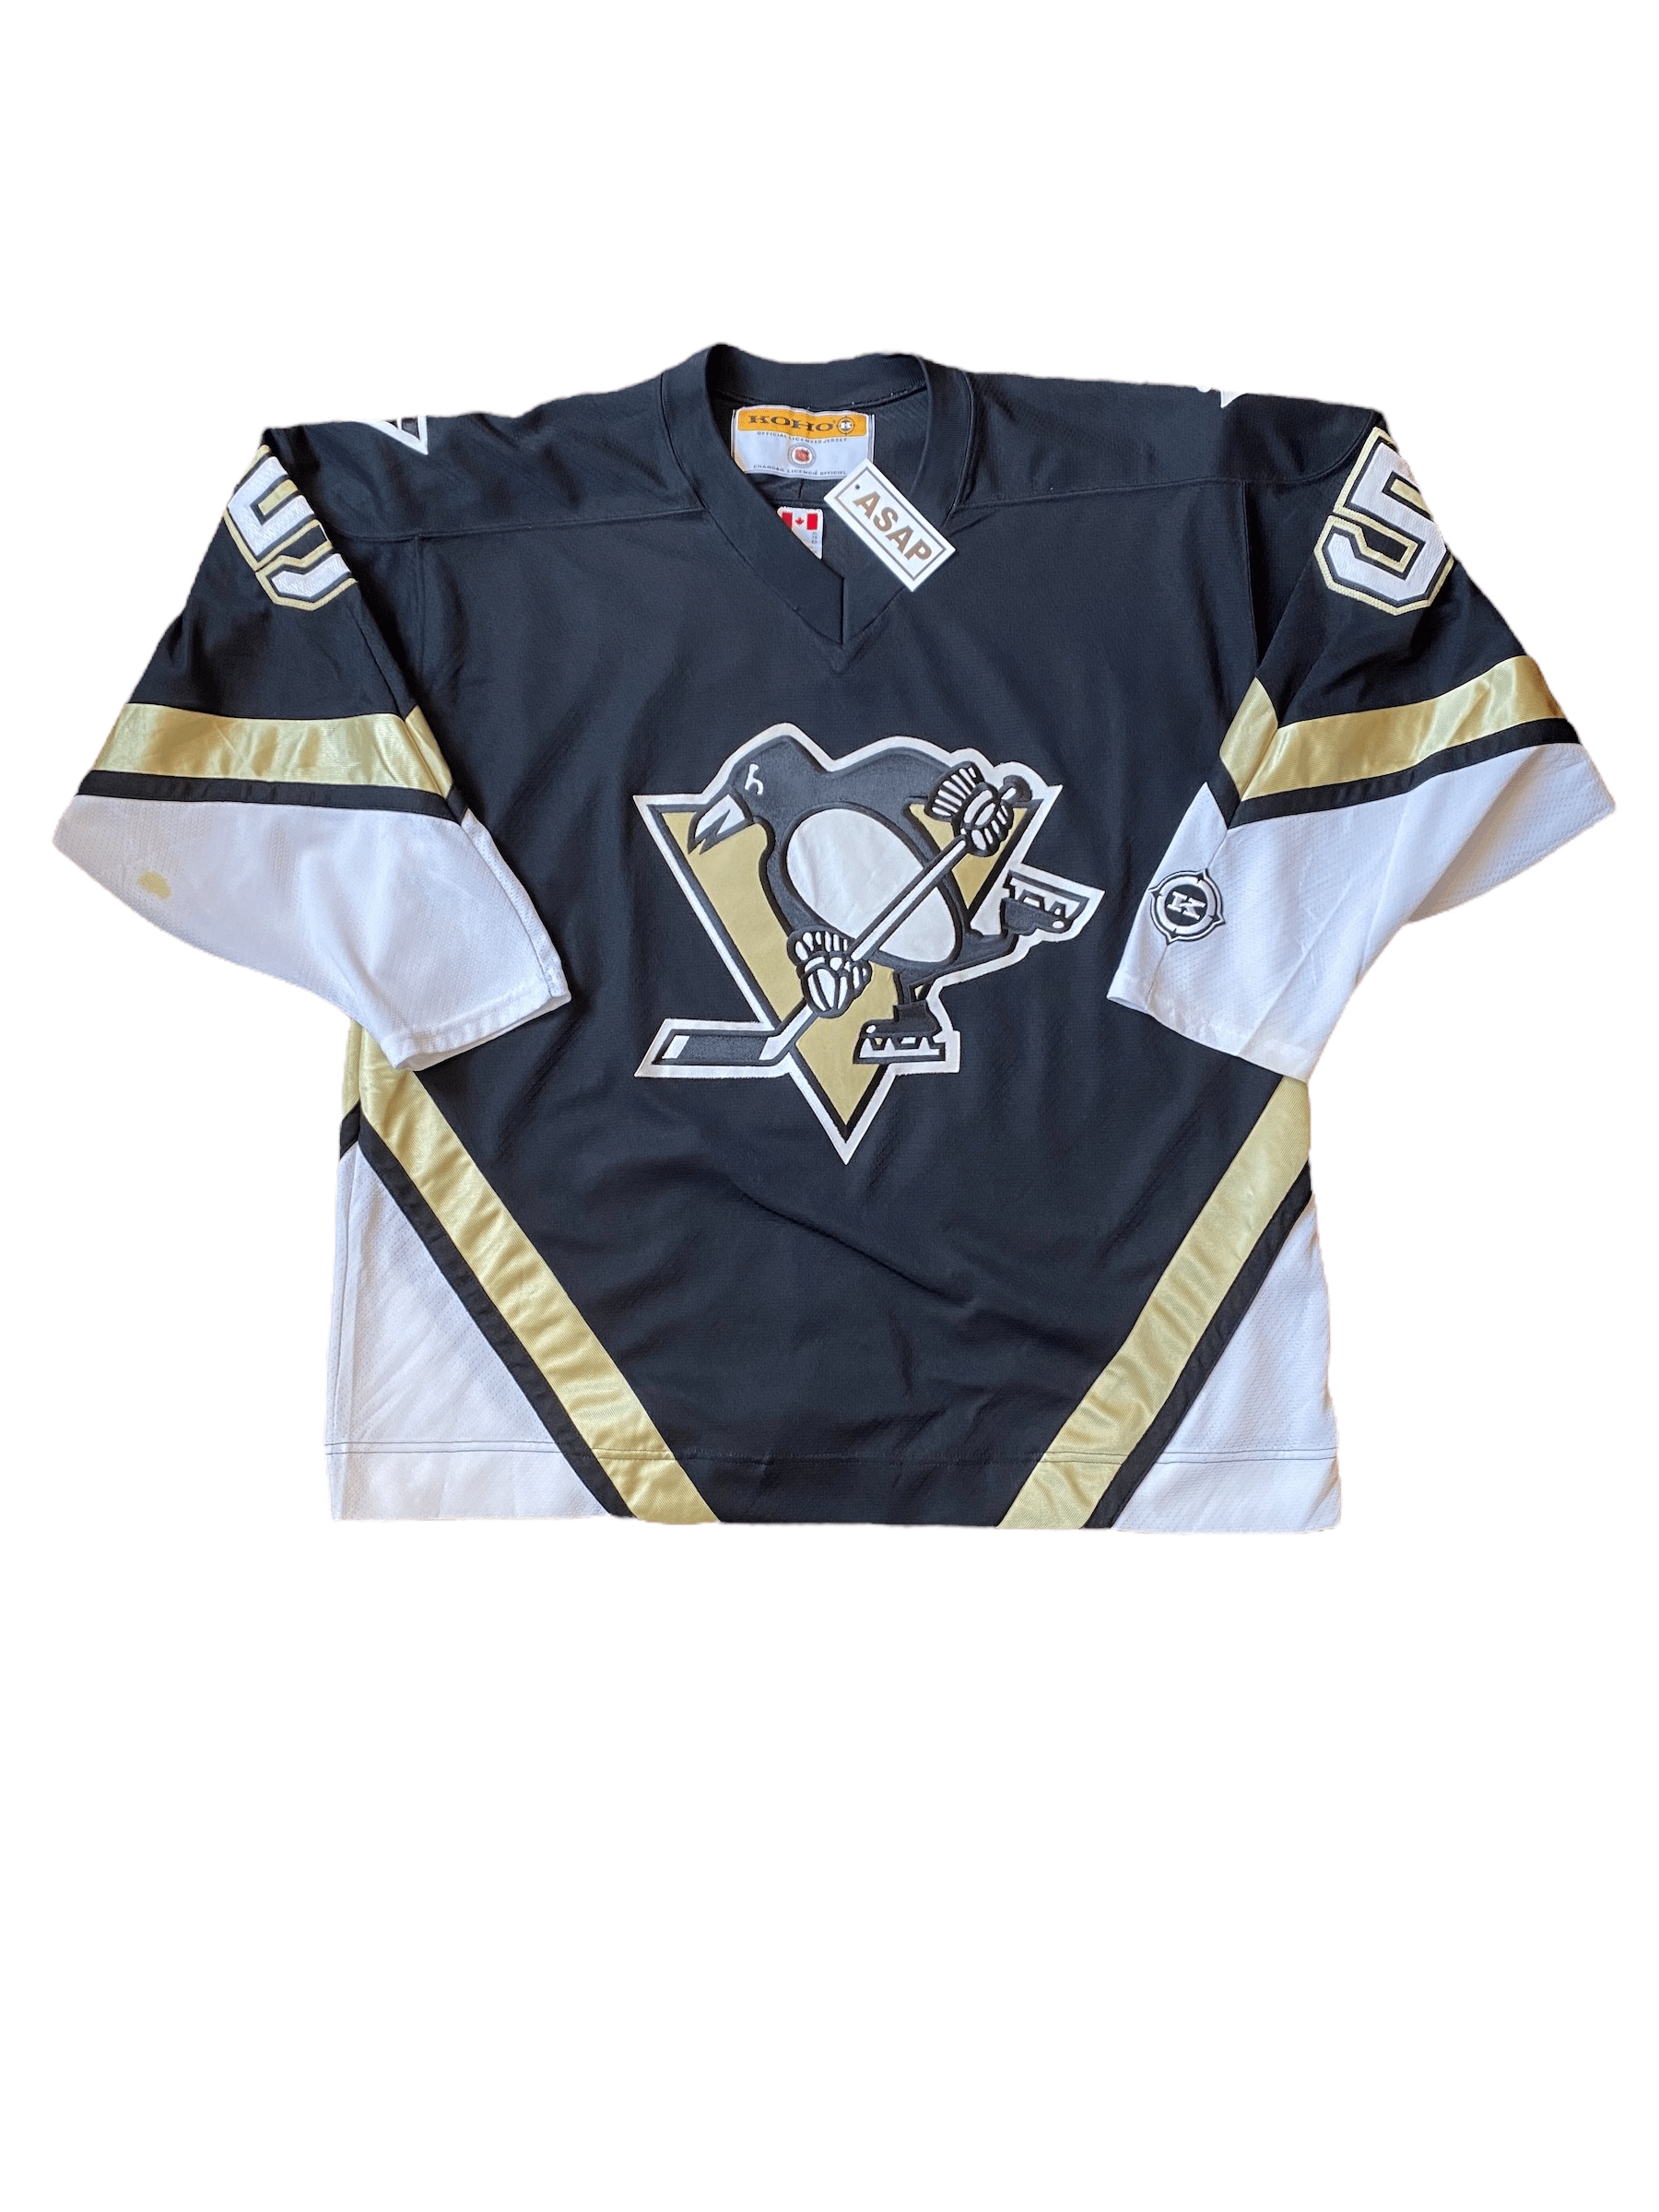 Pittsburgh Penguins Reebok NHL Hockey Stitched Jersey Size Medium